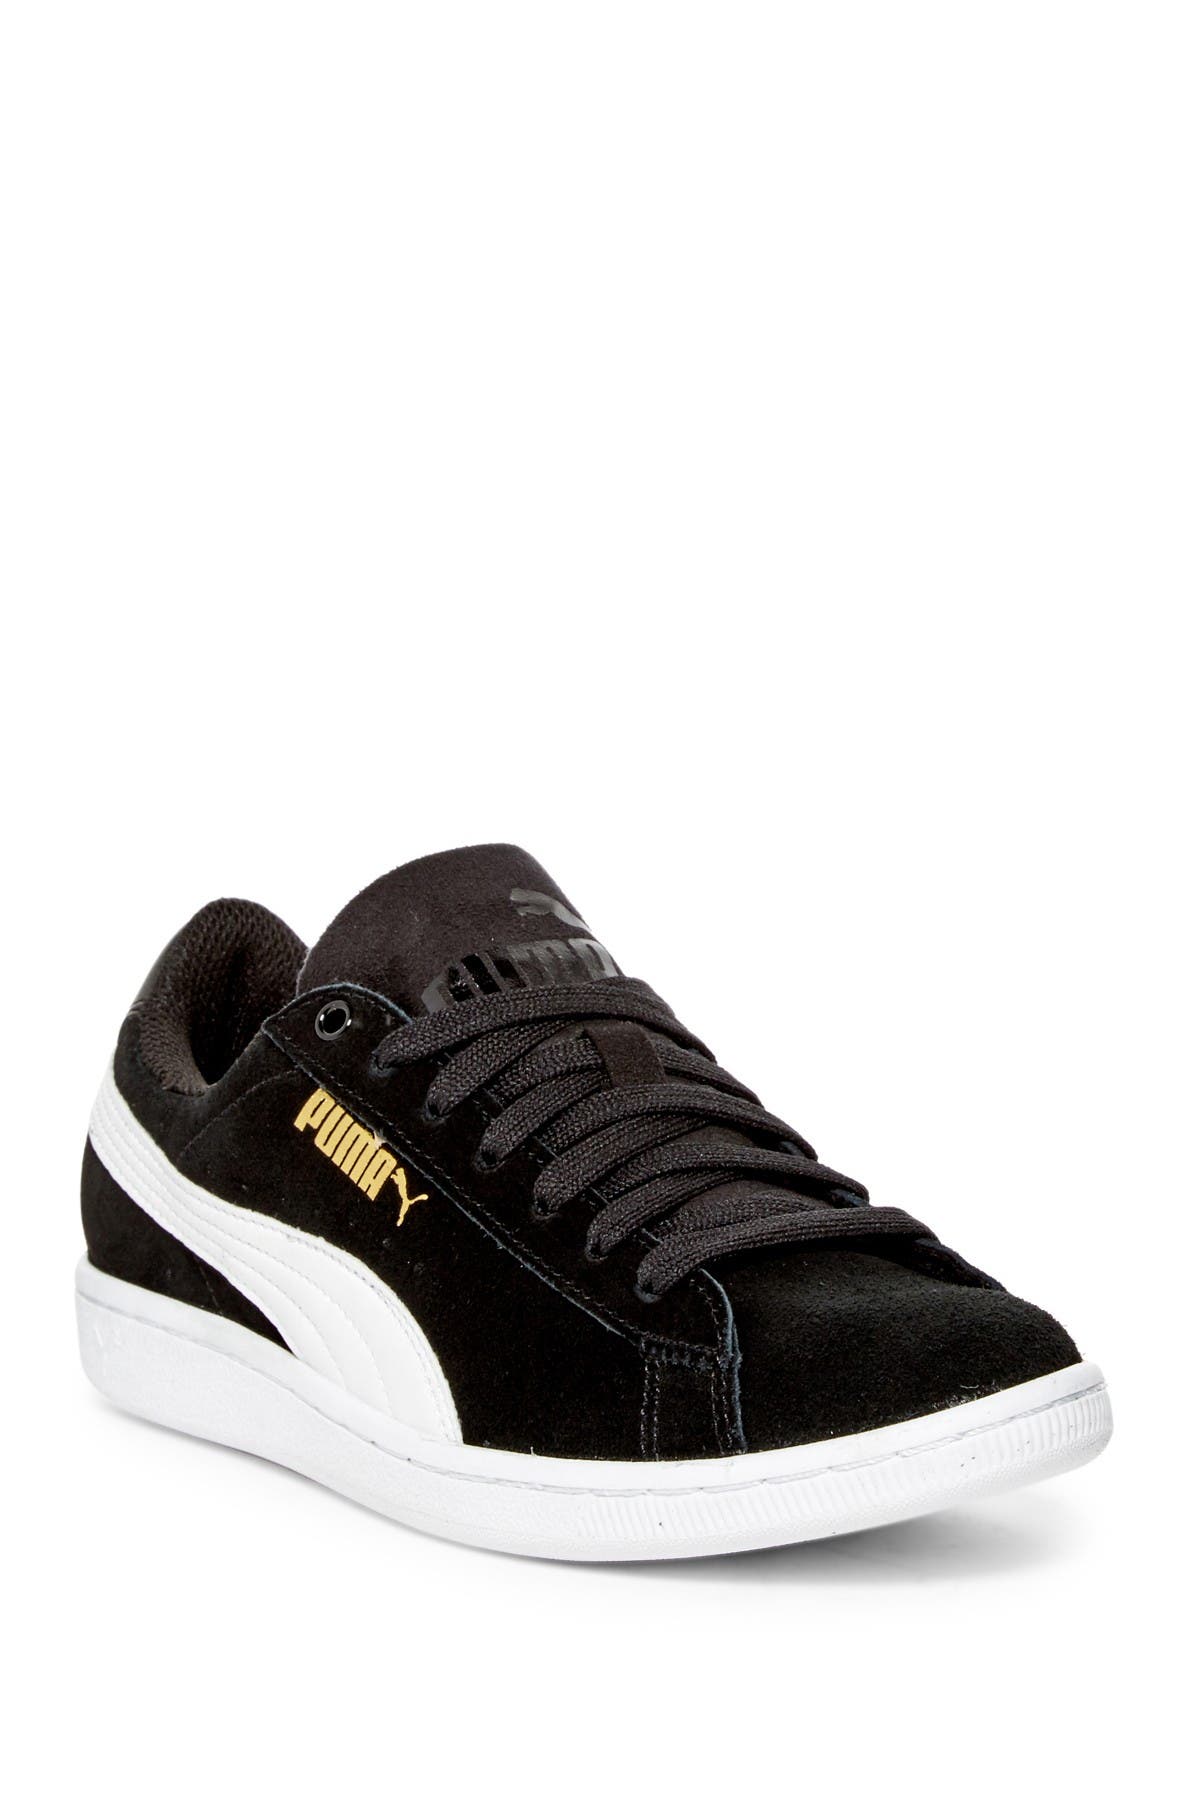 Buurt strip Betreffende Puma Sneakers Suede Classic Xxi Aus Schwarzem Leder In Black/white |  ModeSens